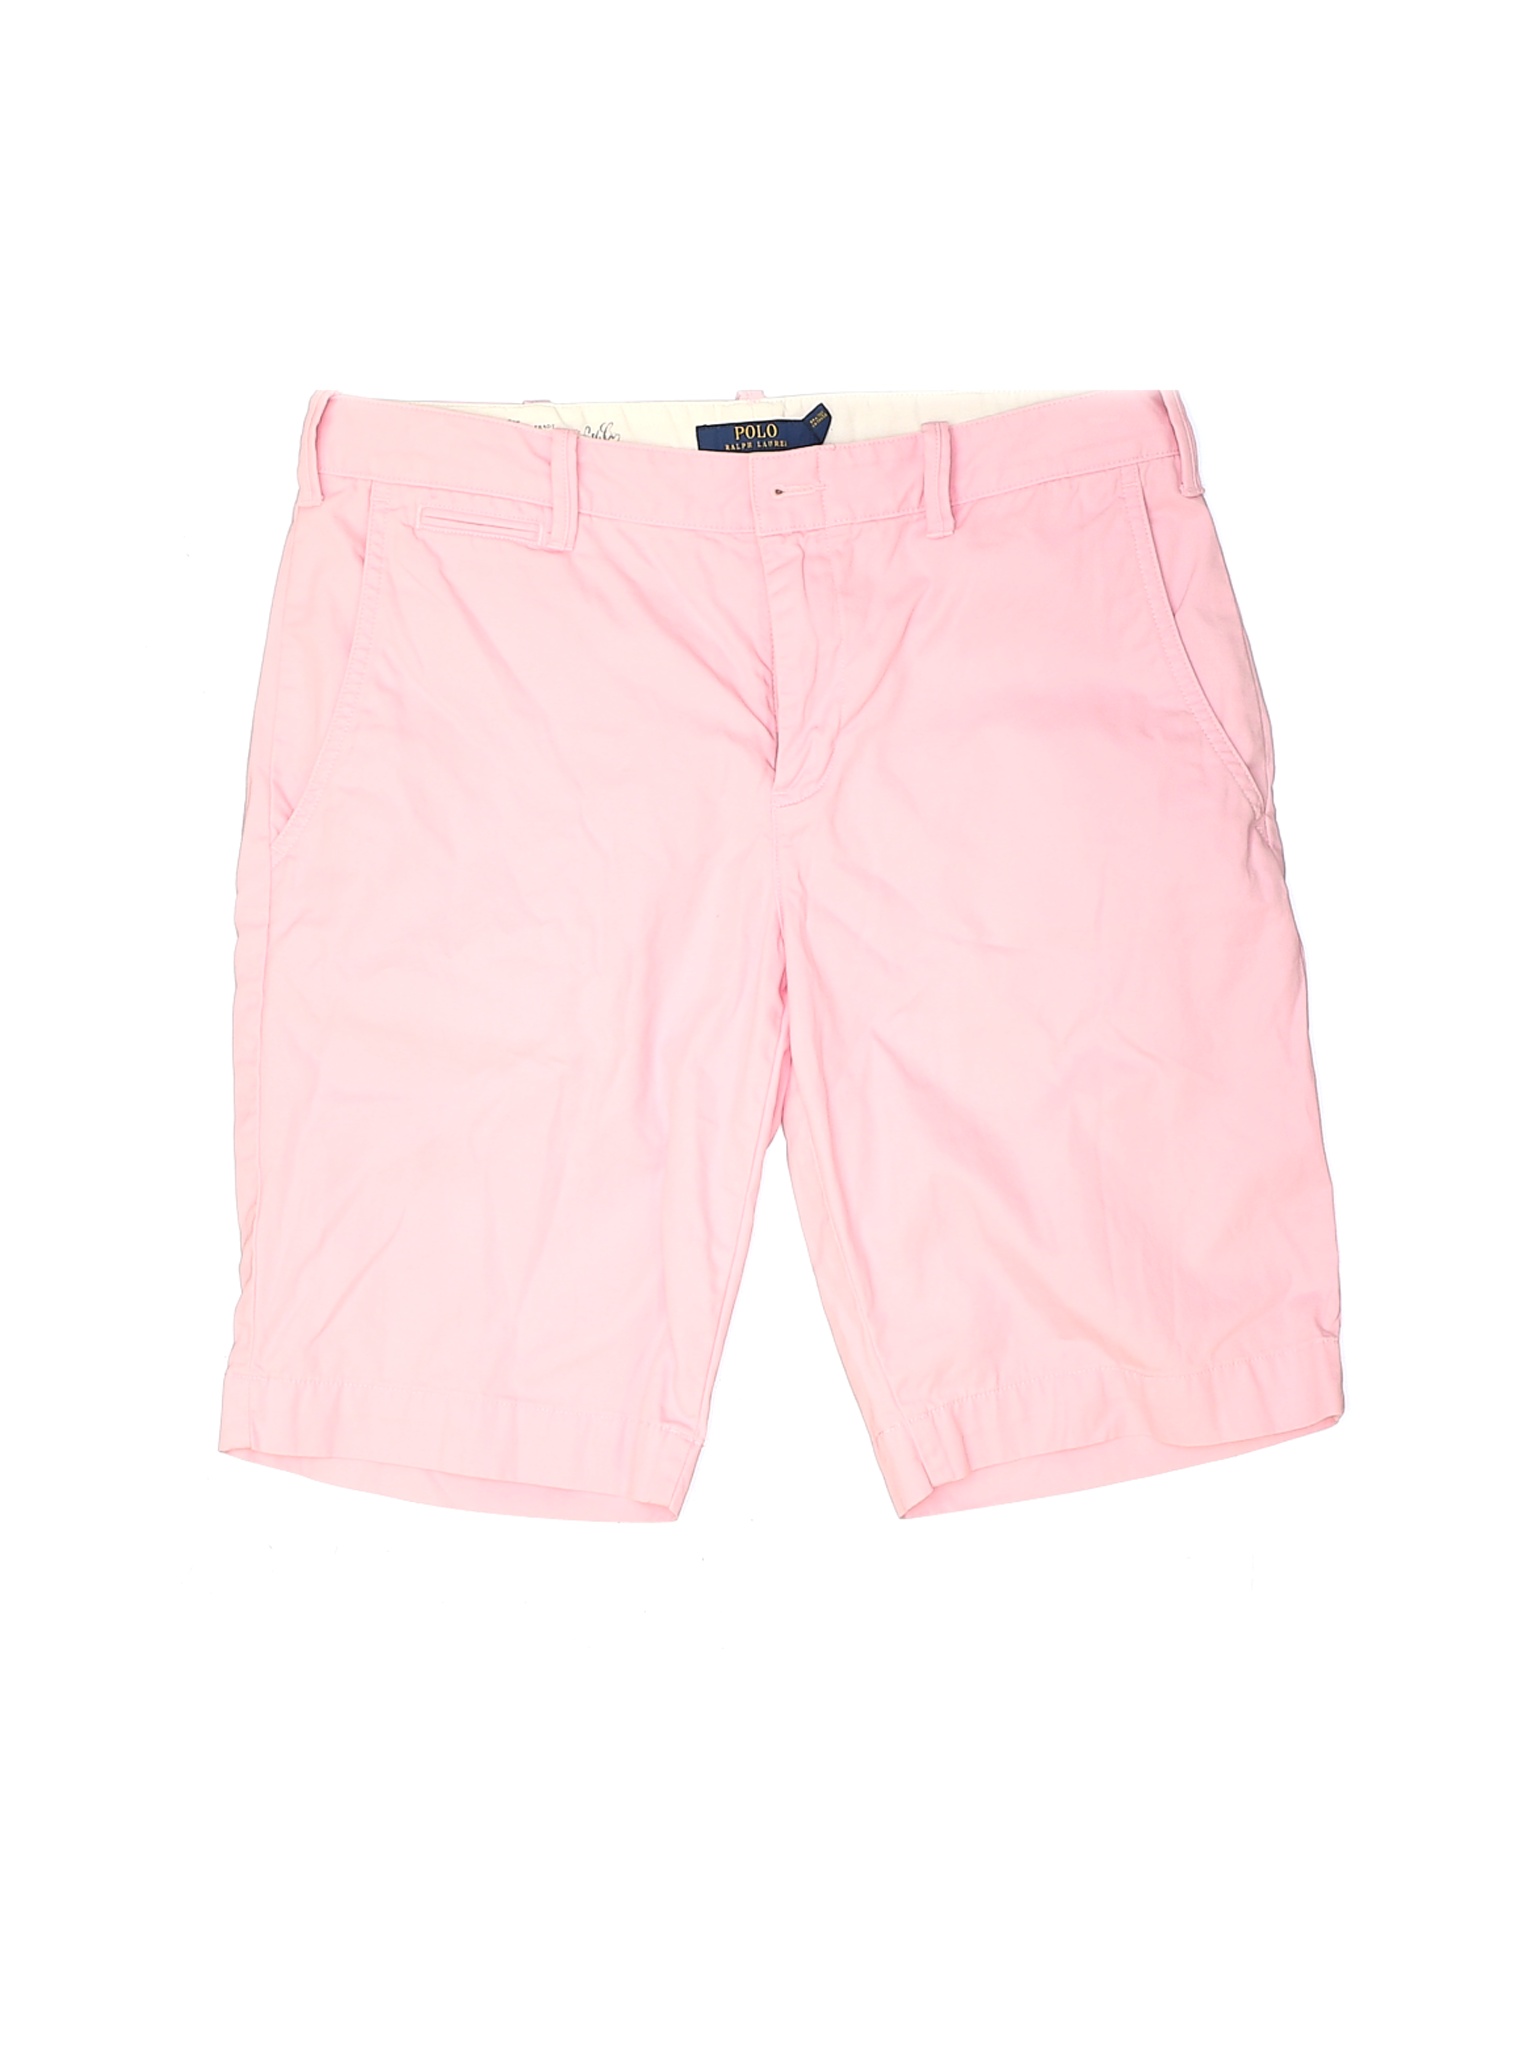 Polo by Ralph Lauren Women Pink Shorts 6 | eBay